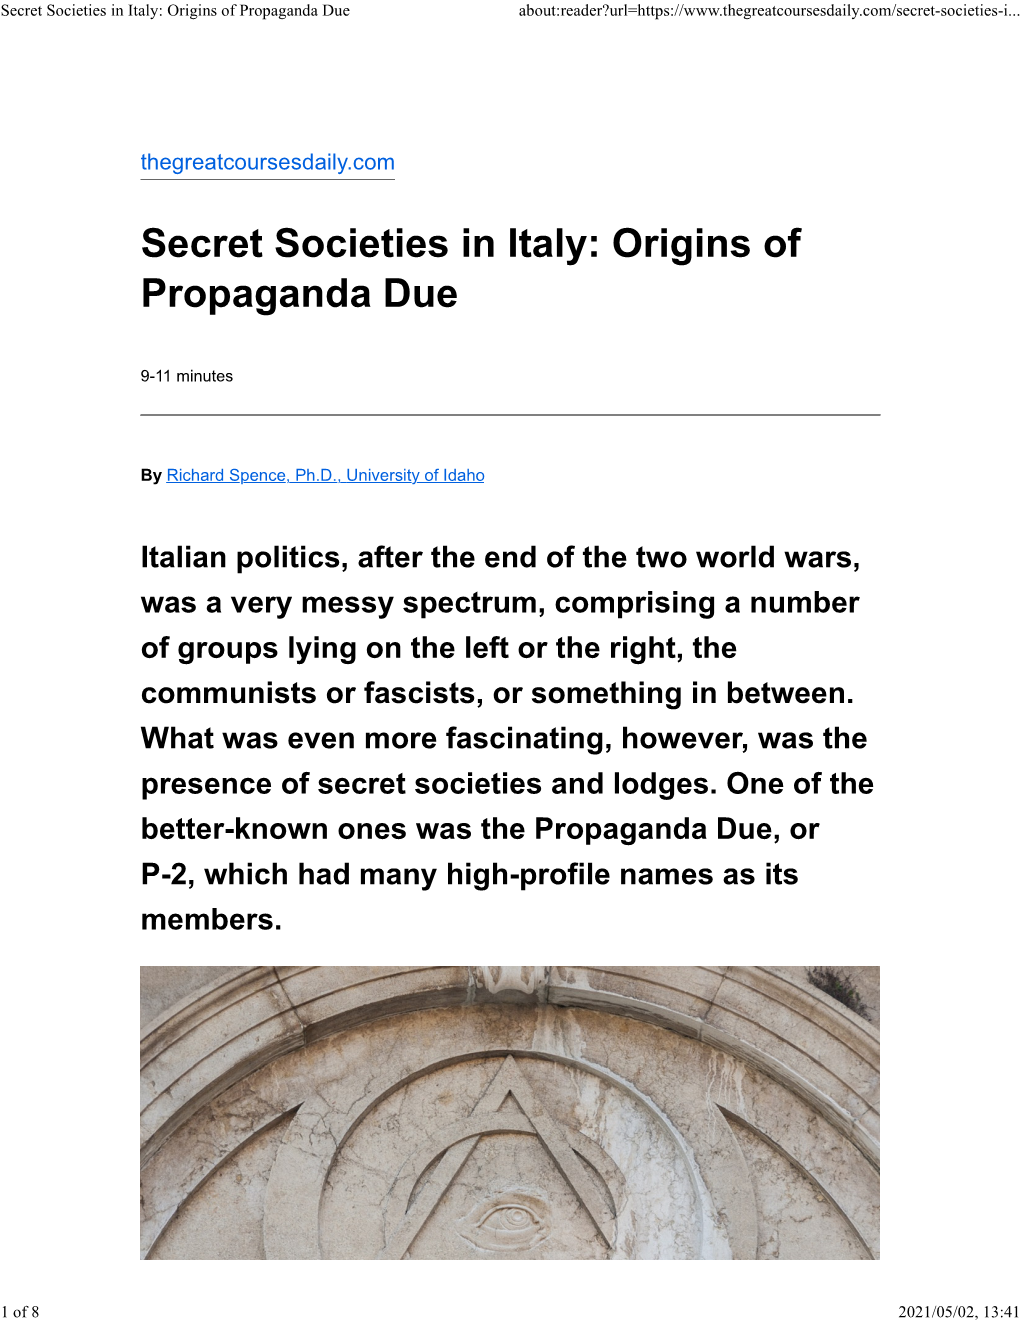 Secret Societies in Italy: Origins of Propaganda Due About:Reader?Url=